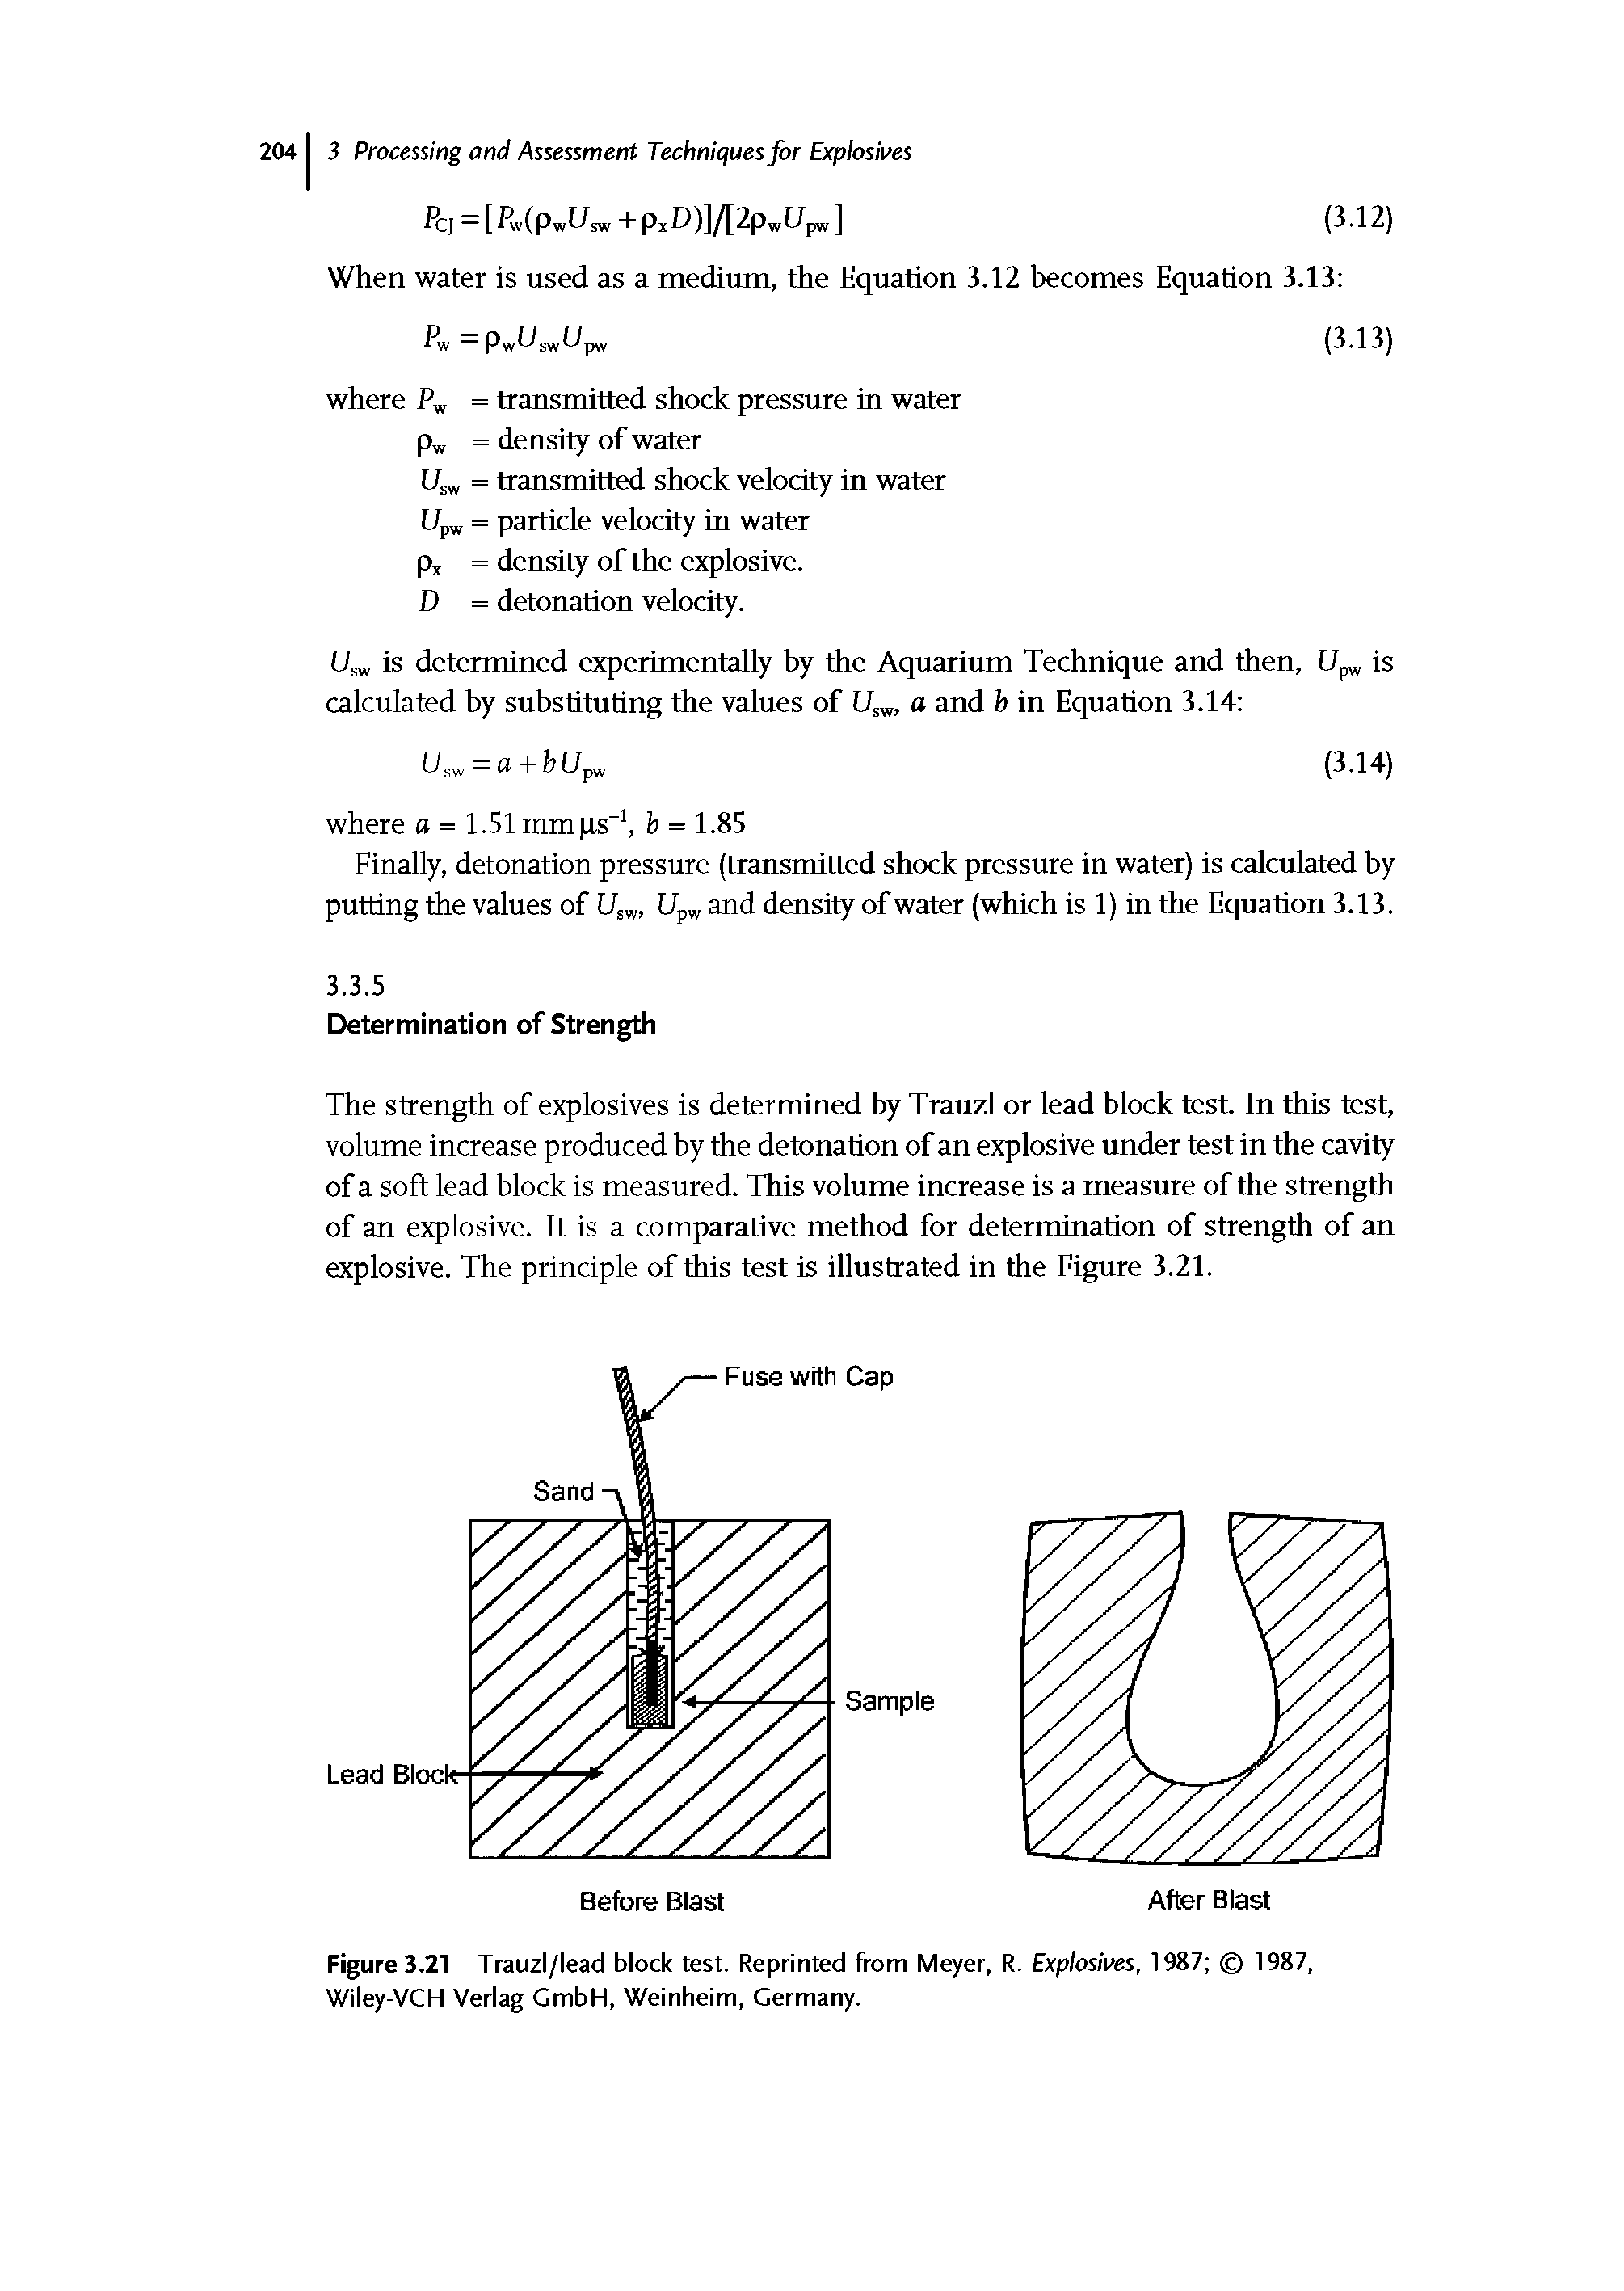 Figure 3.21 Trauzl/lead block test. Reprinted from Meyer, R. Explosives, 1987 1987, Wiley-VCH Verlag GmbH, Weinheim, Germany.